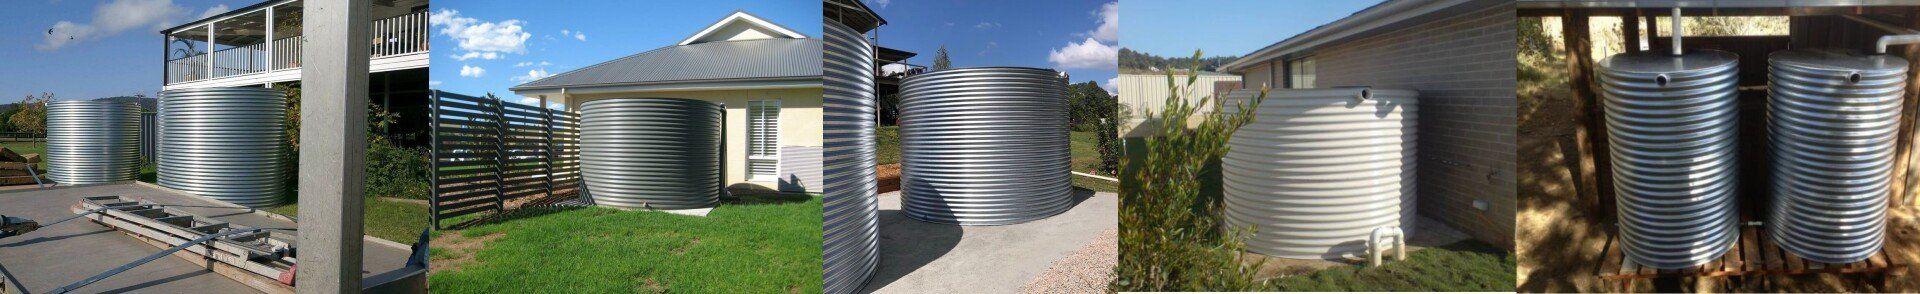 Round Steel Water Tanks Melbourne VIC